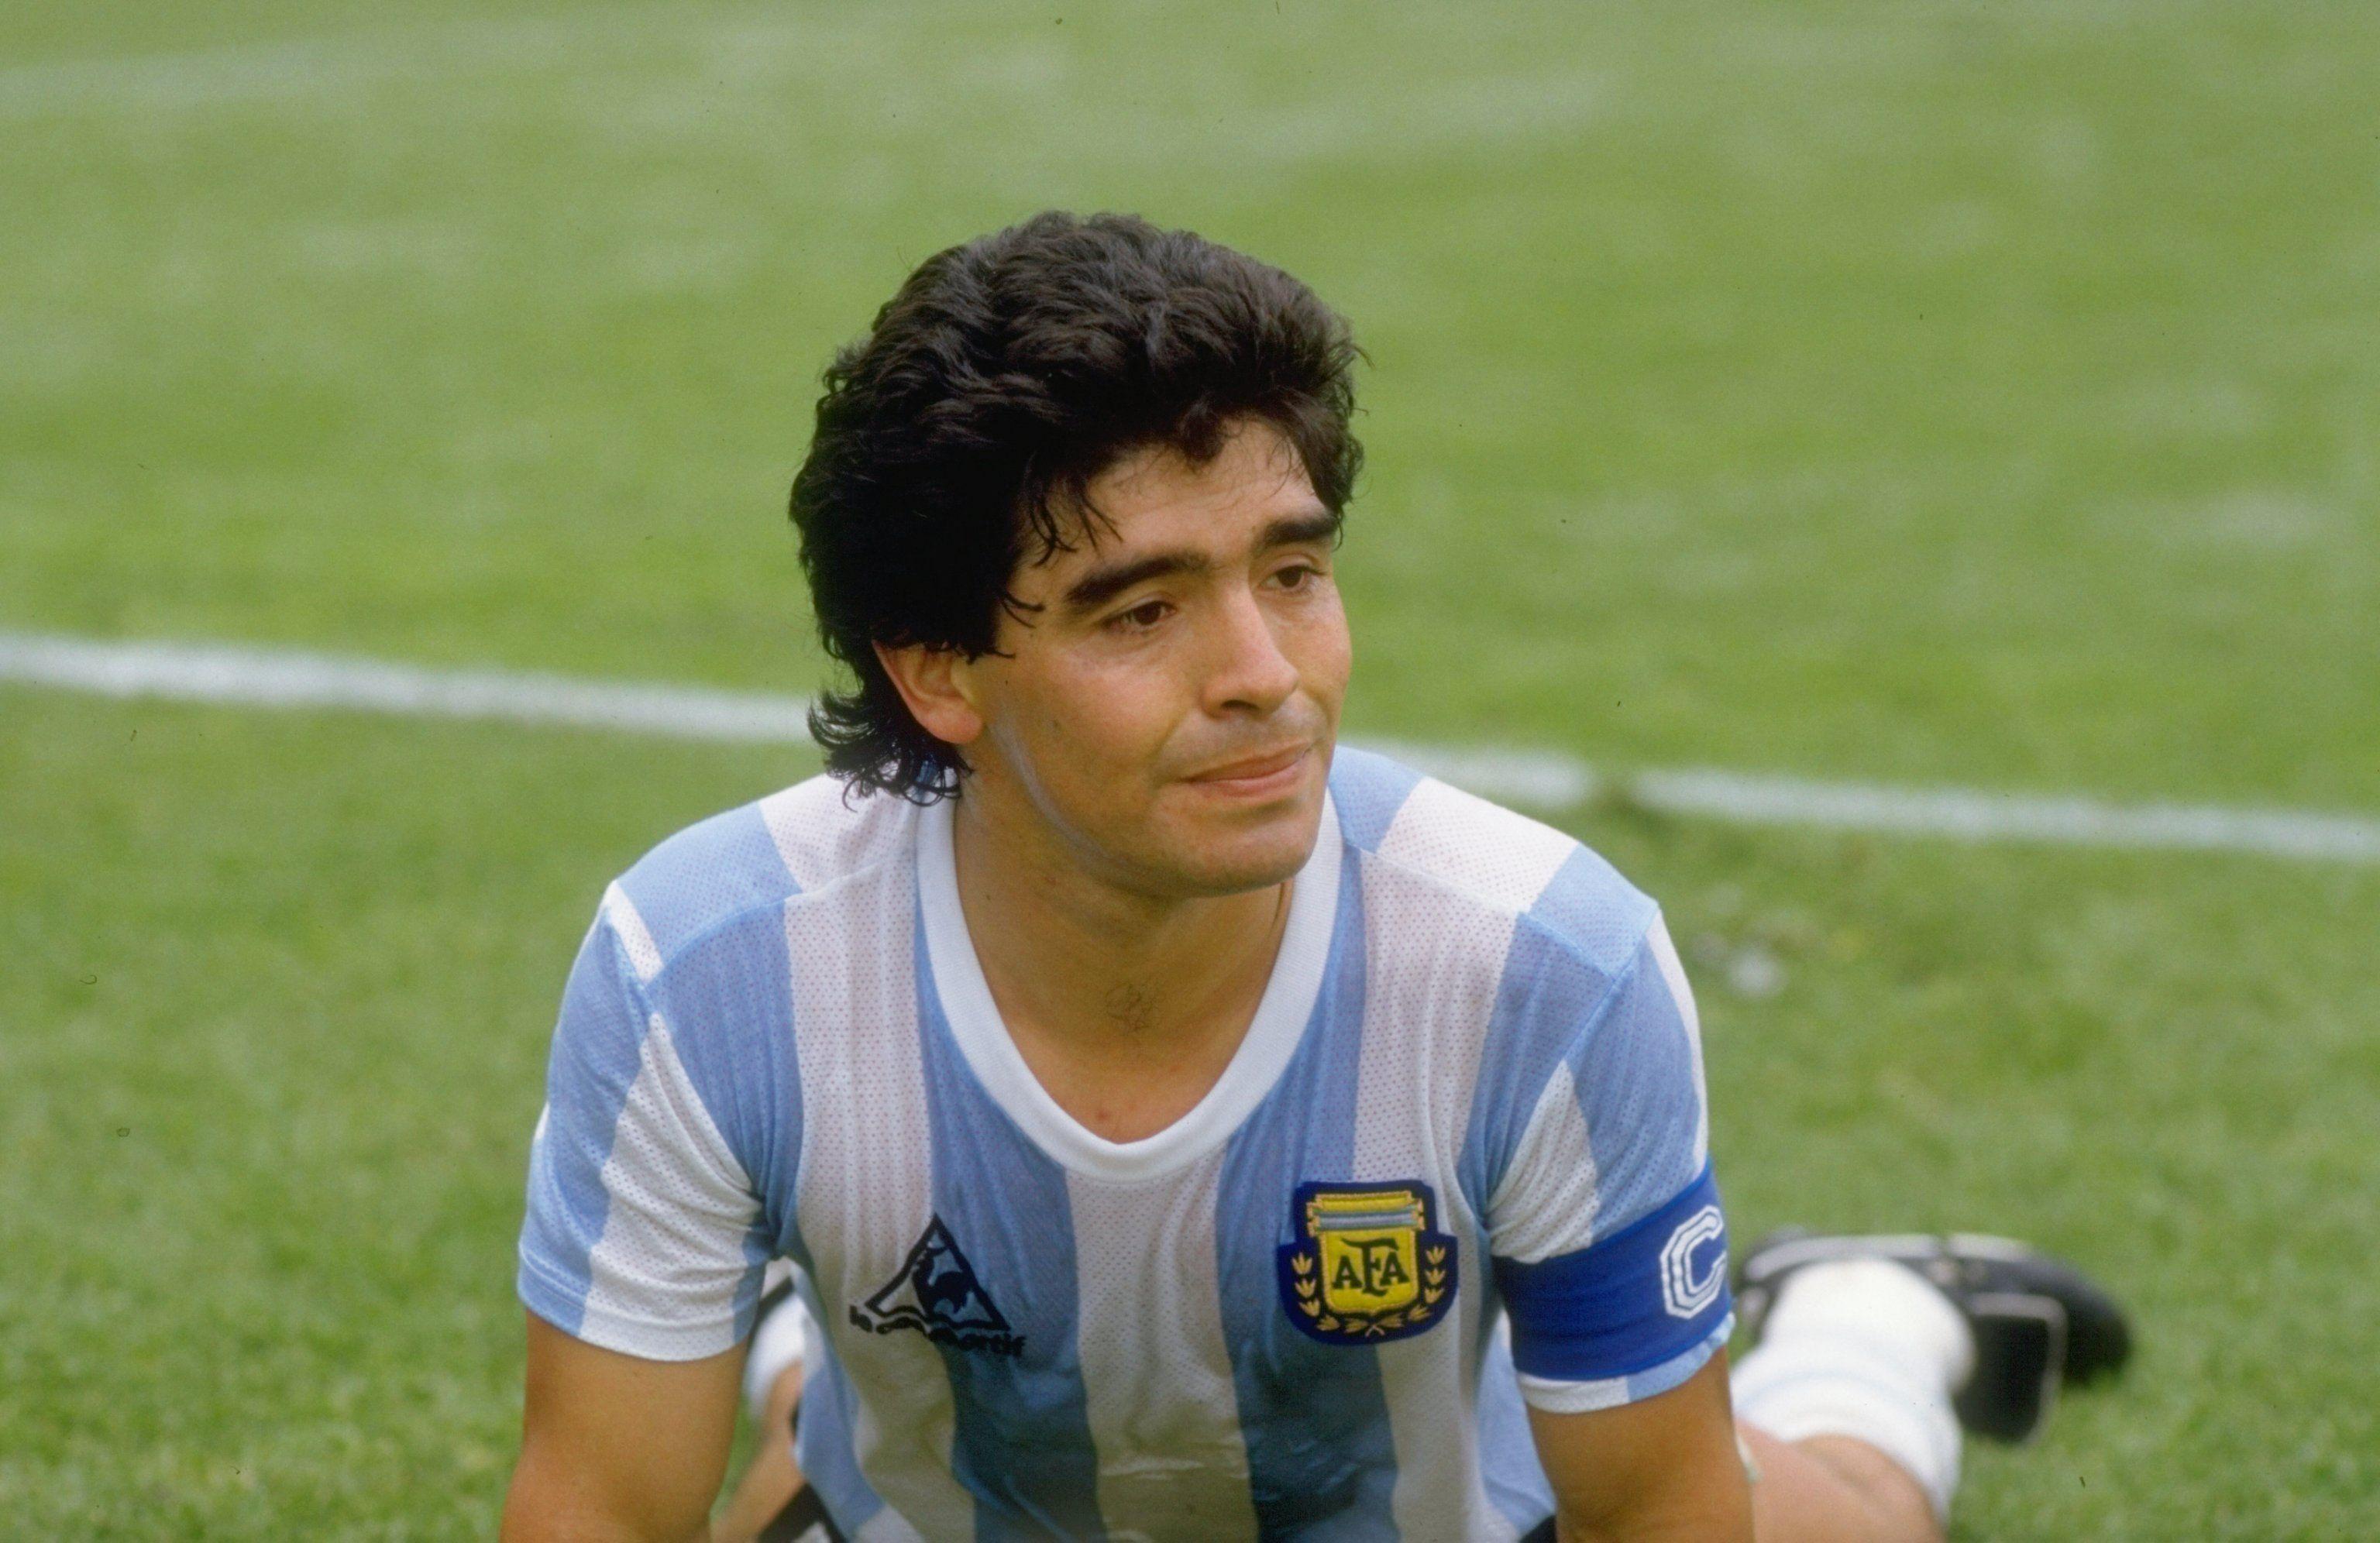 3072 x 1992 · jpeg - Diego Maradona Wallpapers - Wallpaper Cave